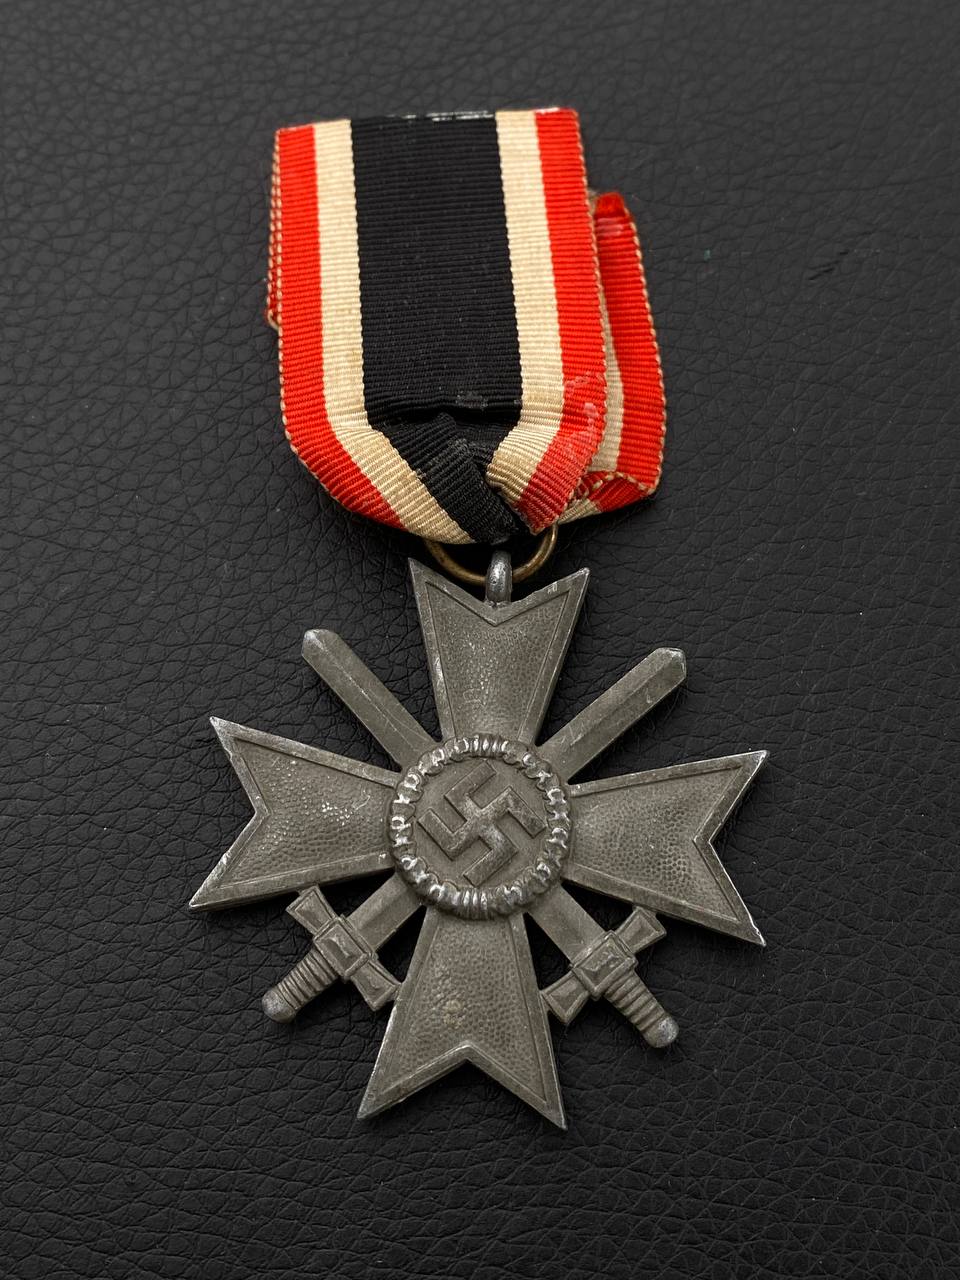 Крест Военных заслуг (Kriegsverdienstkreuz) 2-го класса. Цинк, клеймо “10” – Foerster&Barth, Pforzheim.